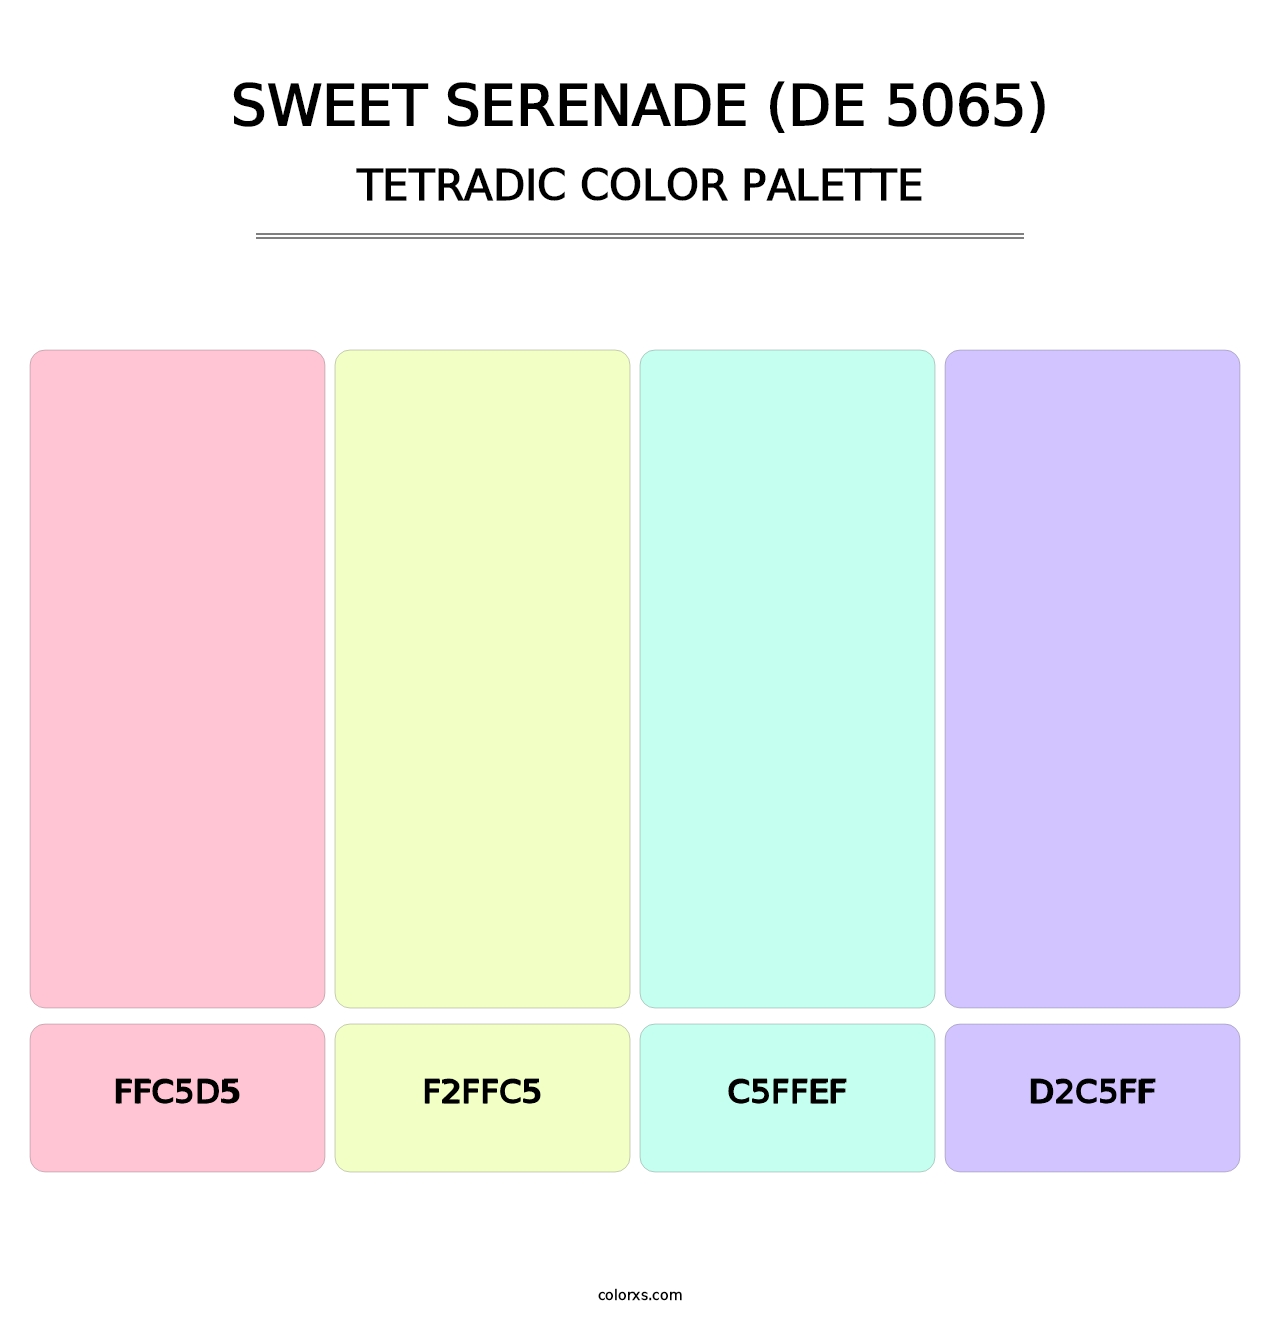 Sweet Serenade (DE 5065) - Tetradic Color Palette